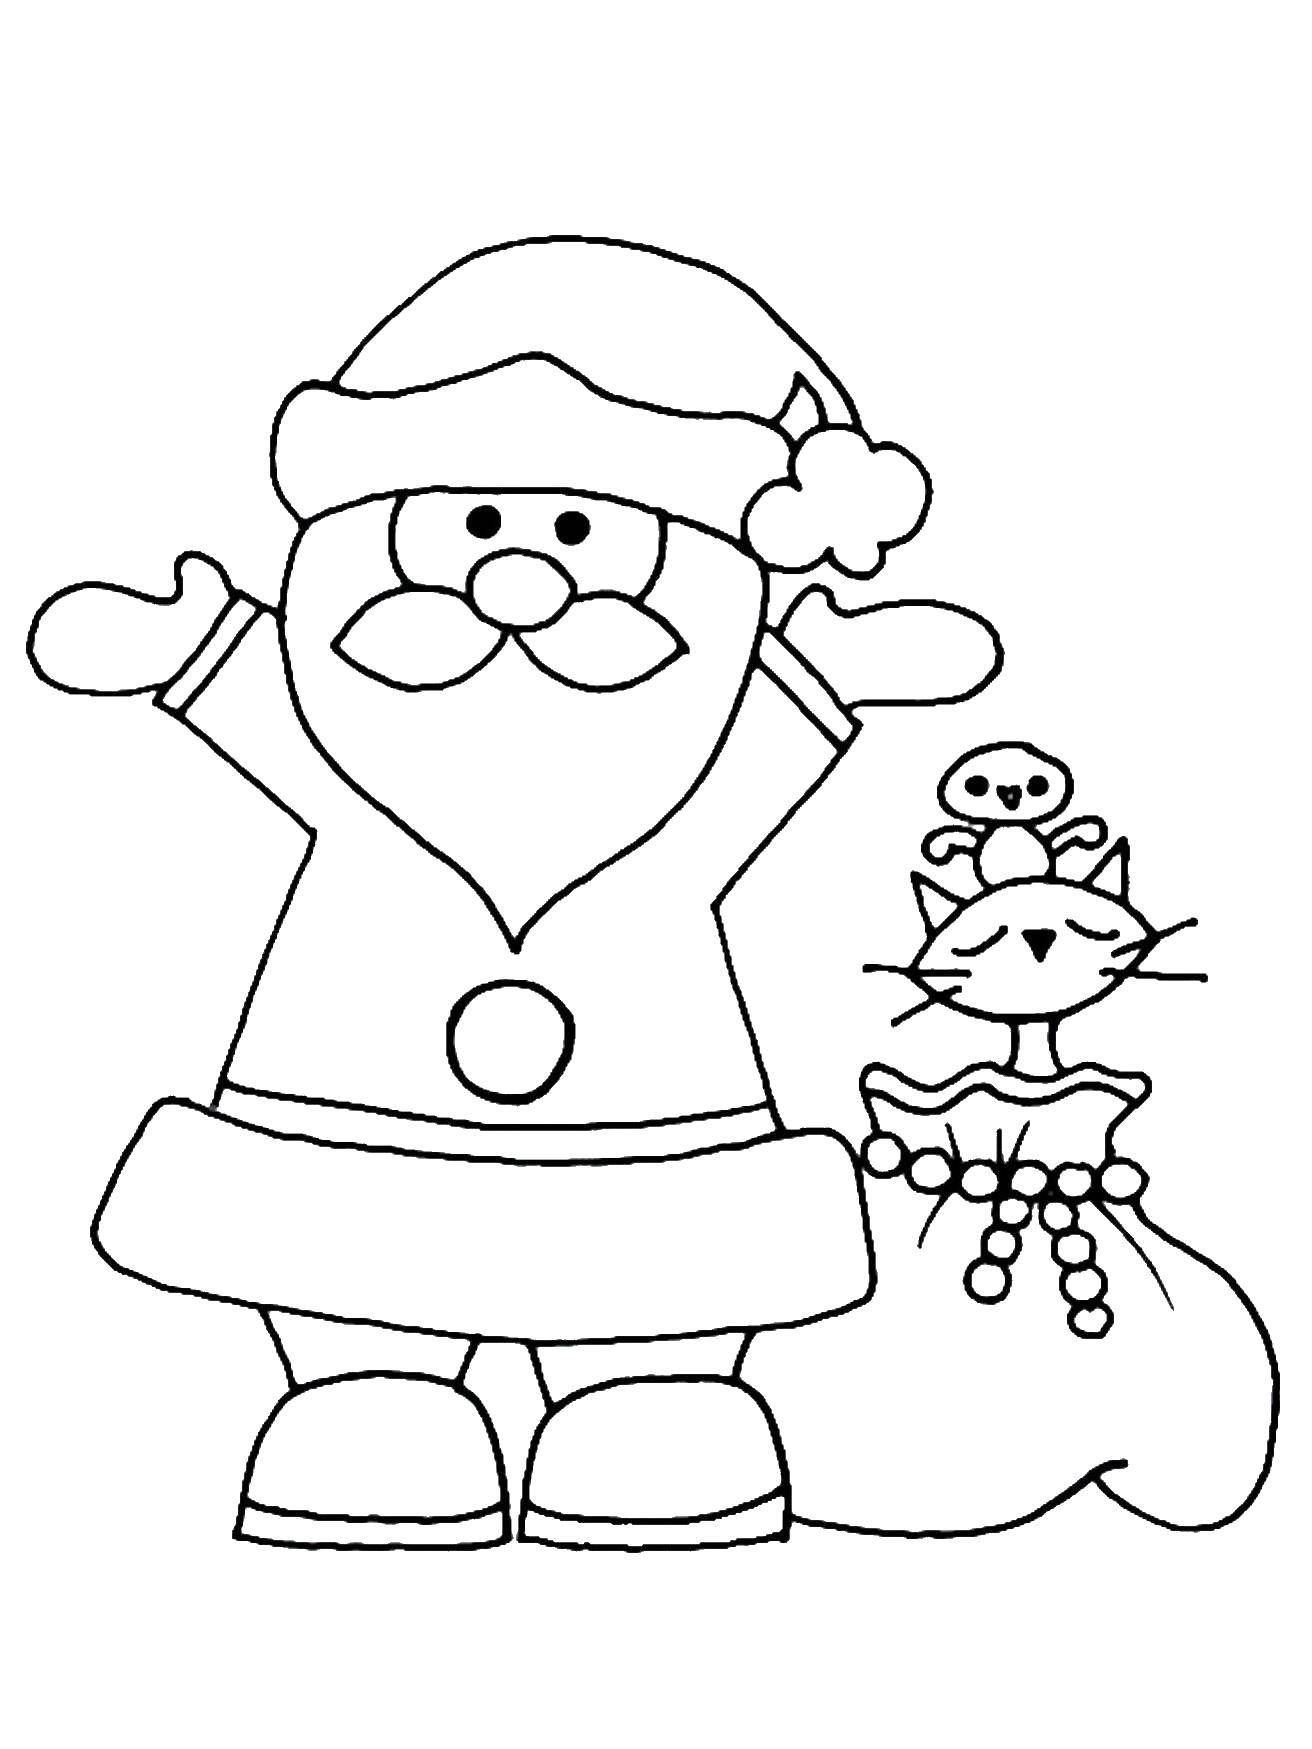 Санта Клаус раскраска для детей